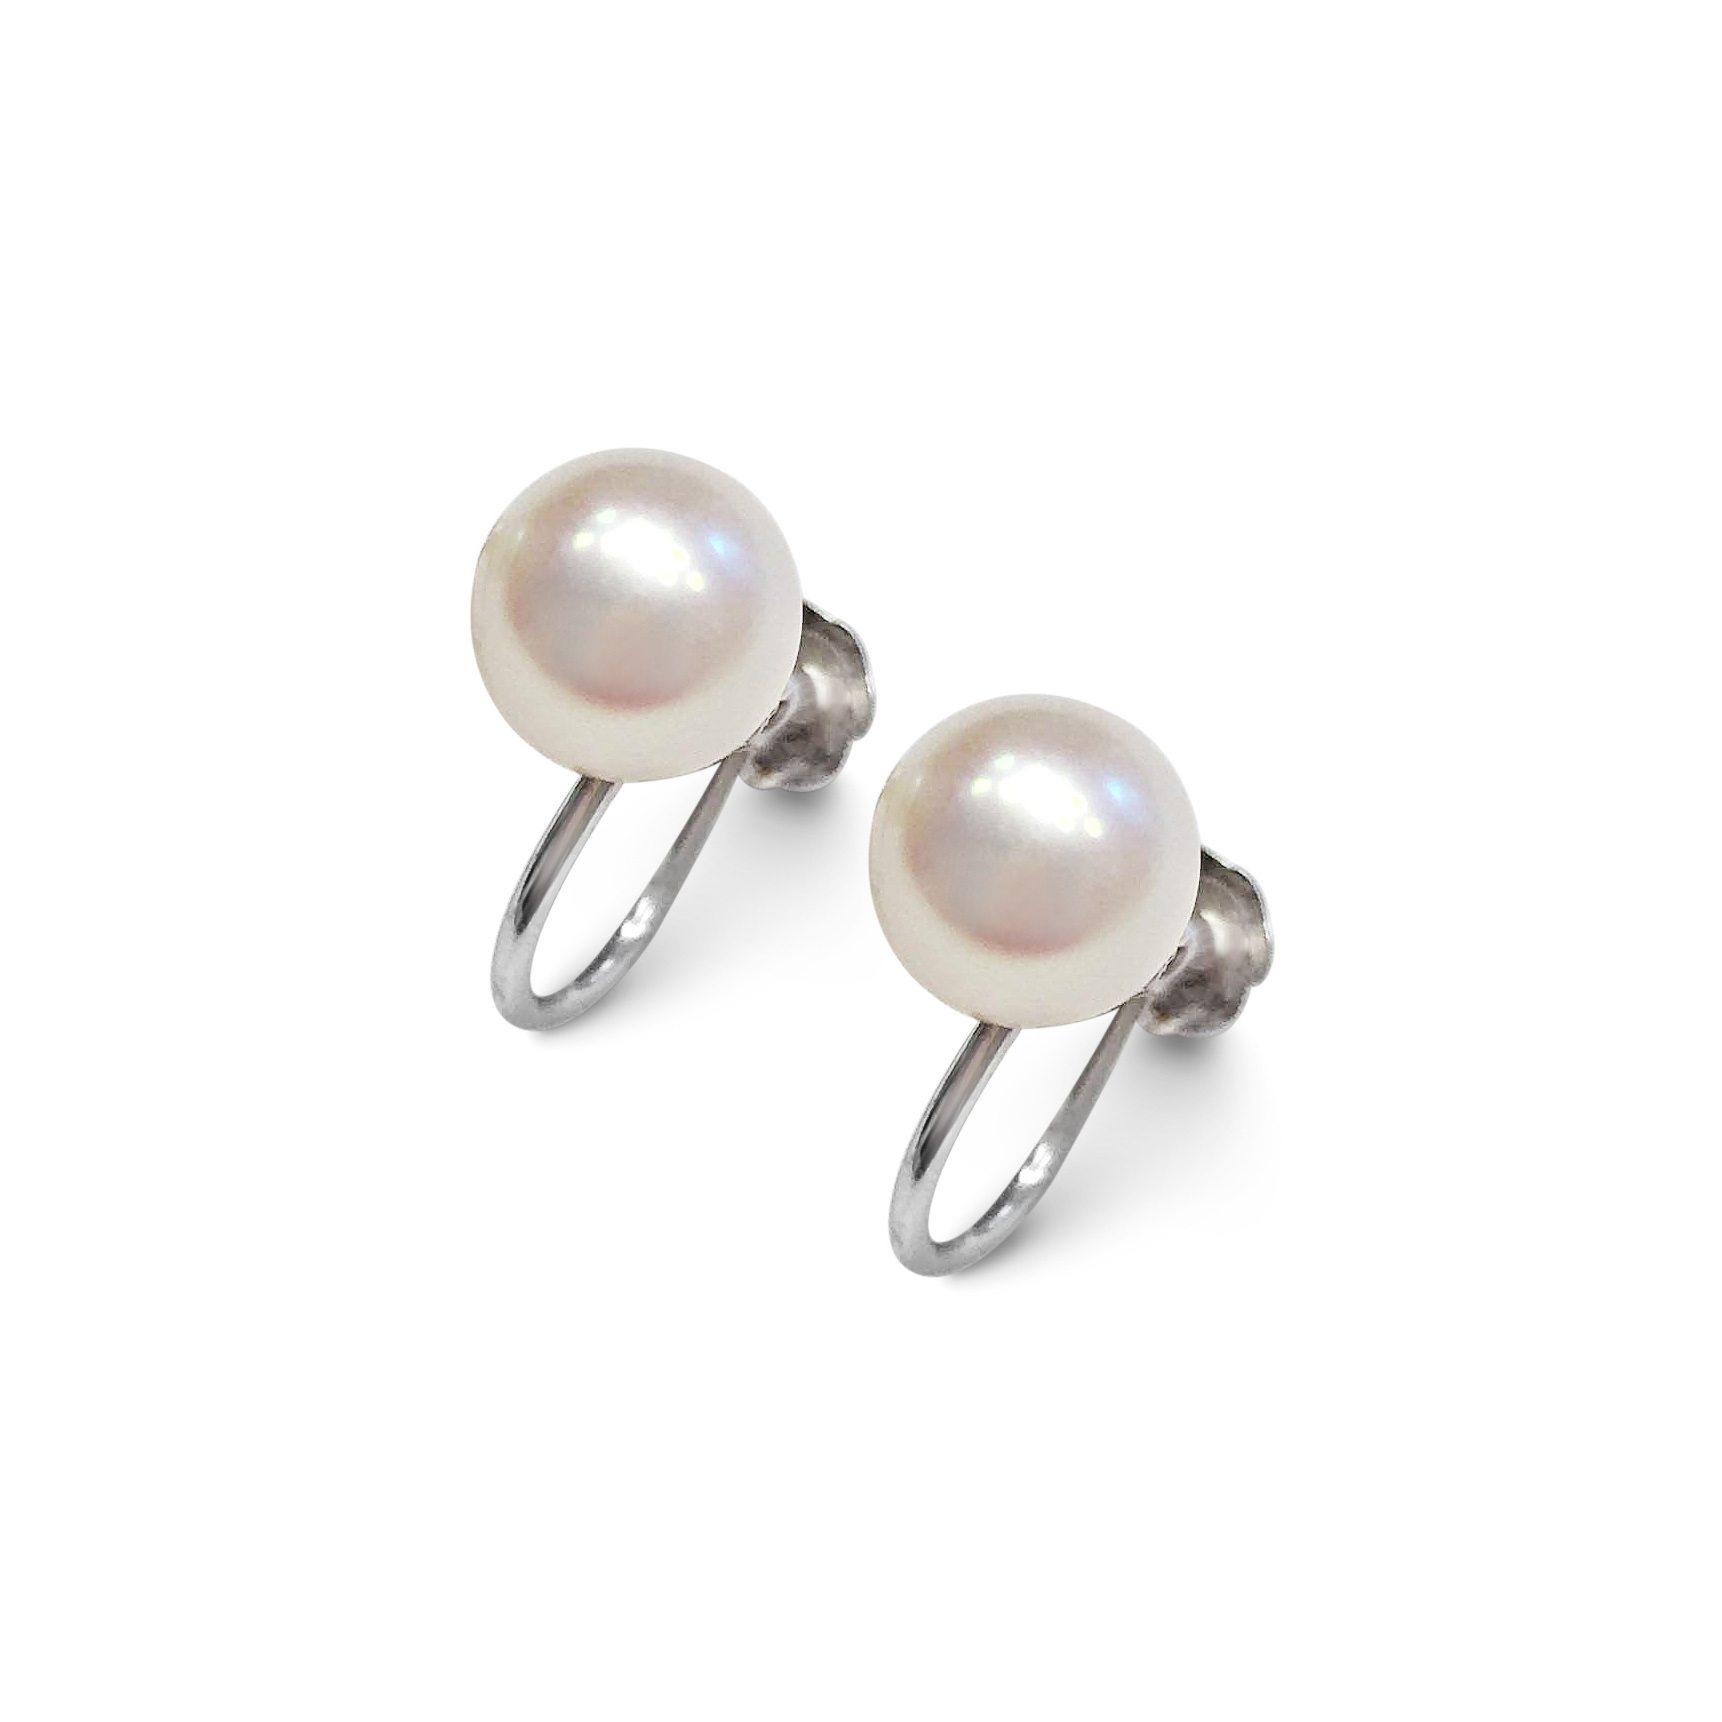 bespoke-cultured-pearl-stud-earrings-with-18ct-white-gold-screw-back-fittings.jpg